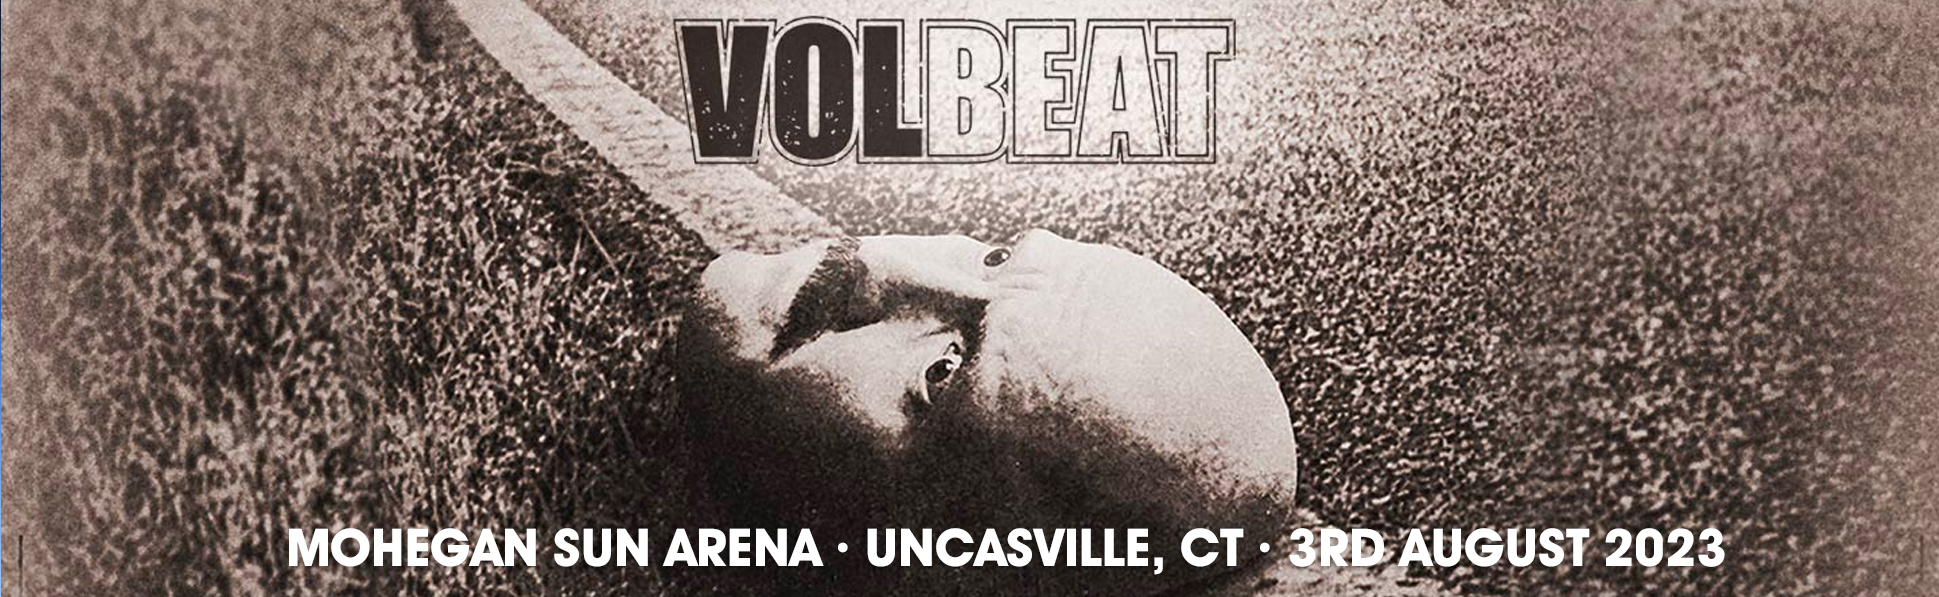 Volbeat at Mohegan Sun Arena